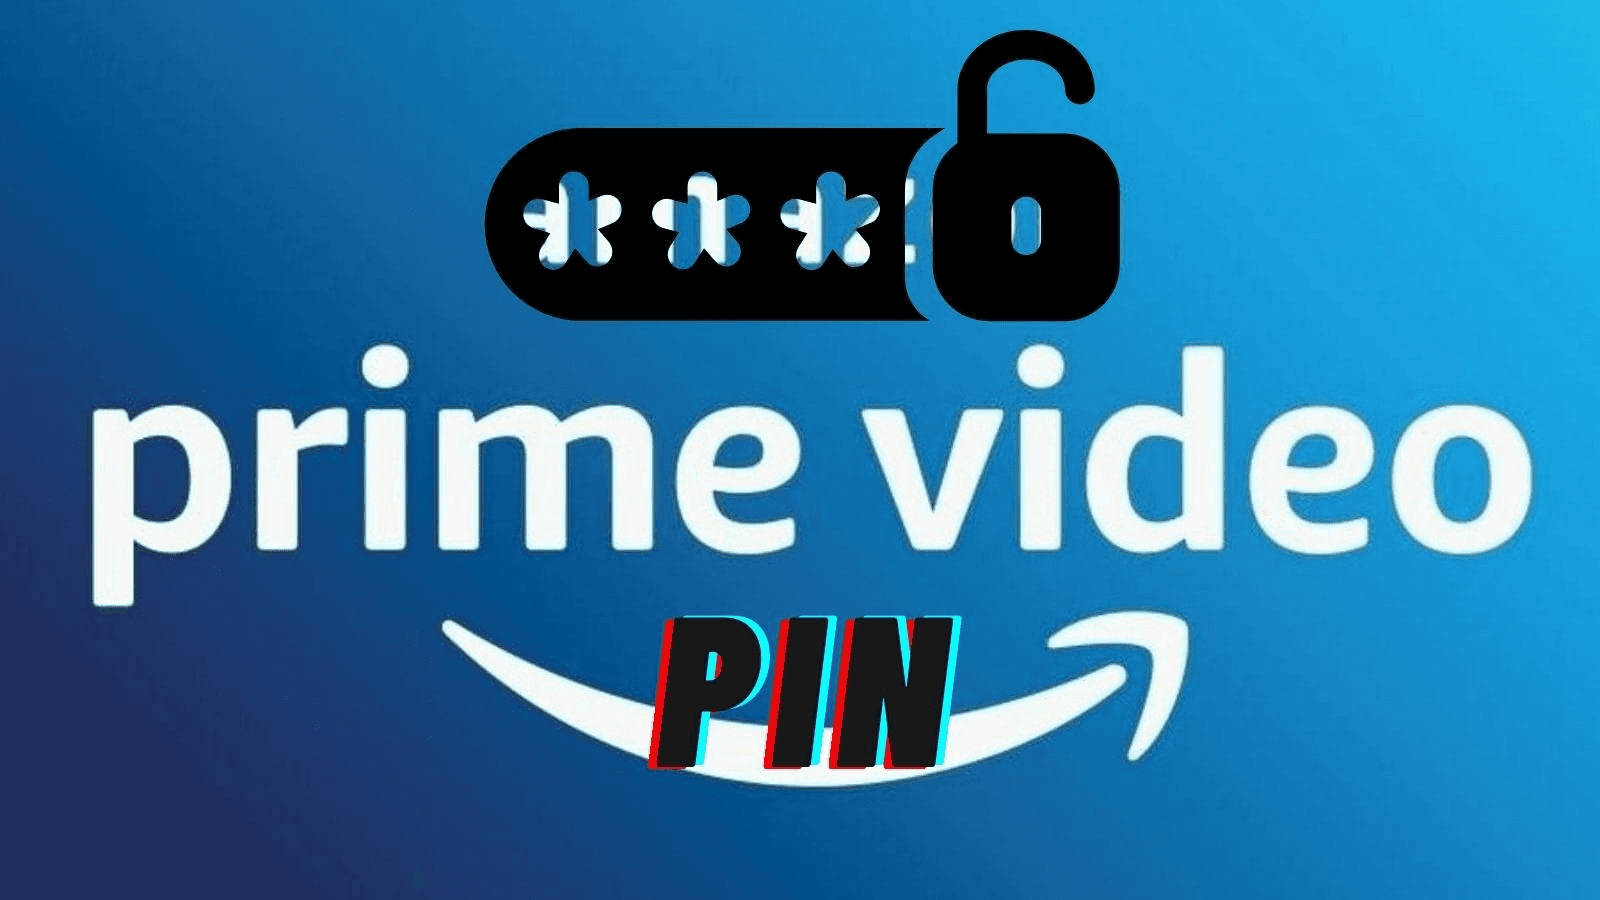 Amazon Prime Video PIN